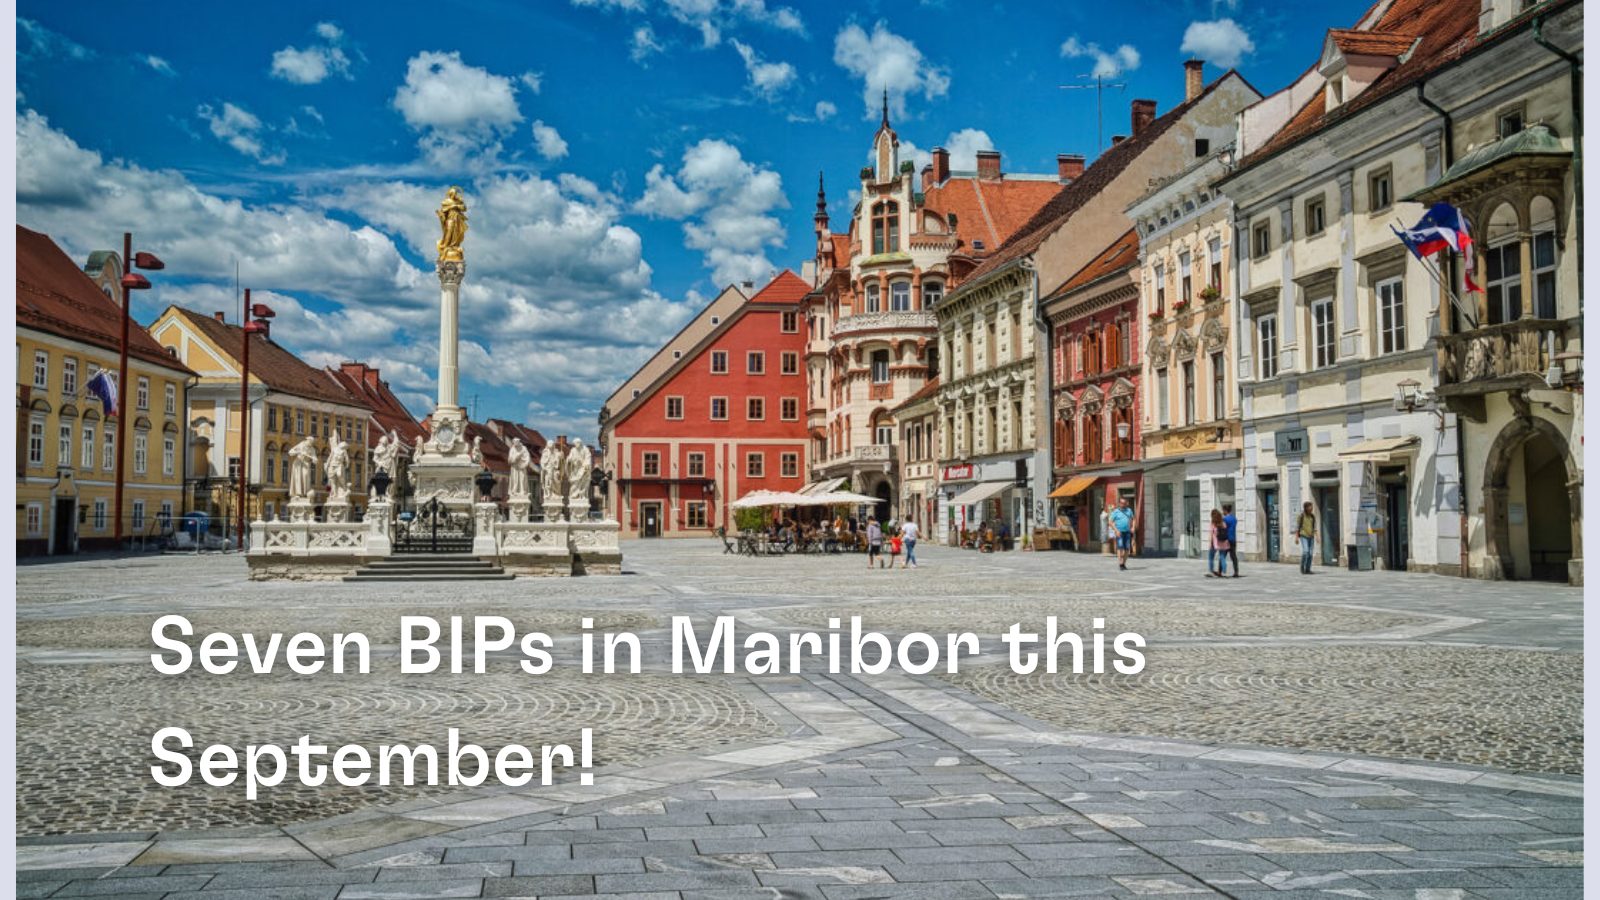 BIPs in Maribor